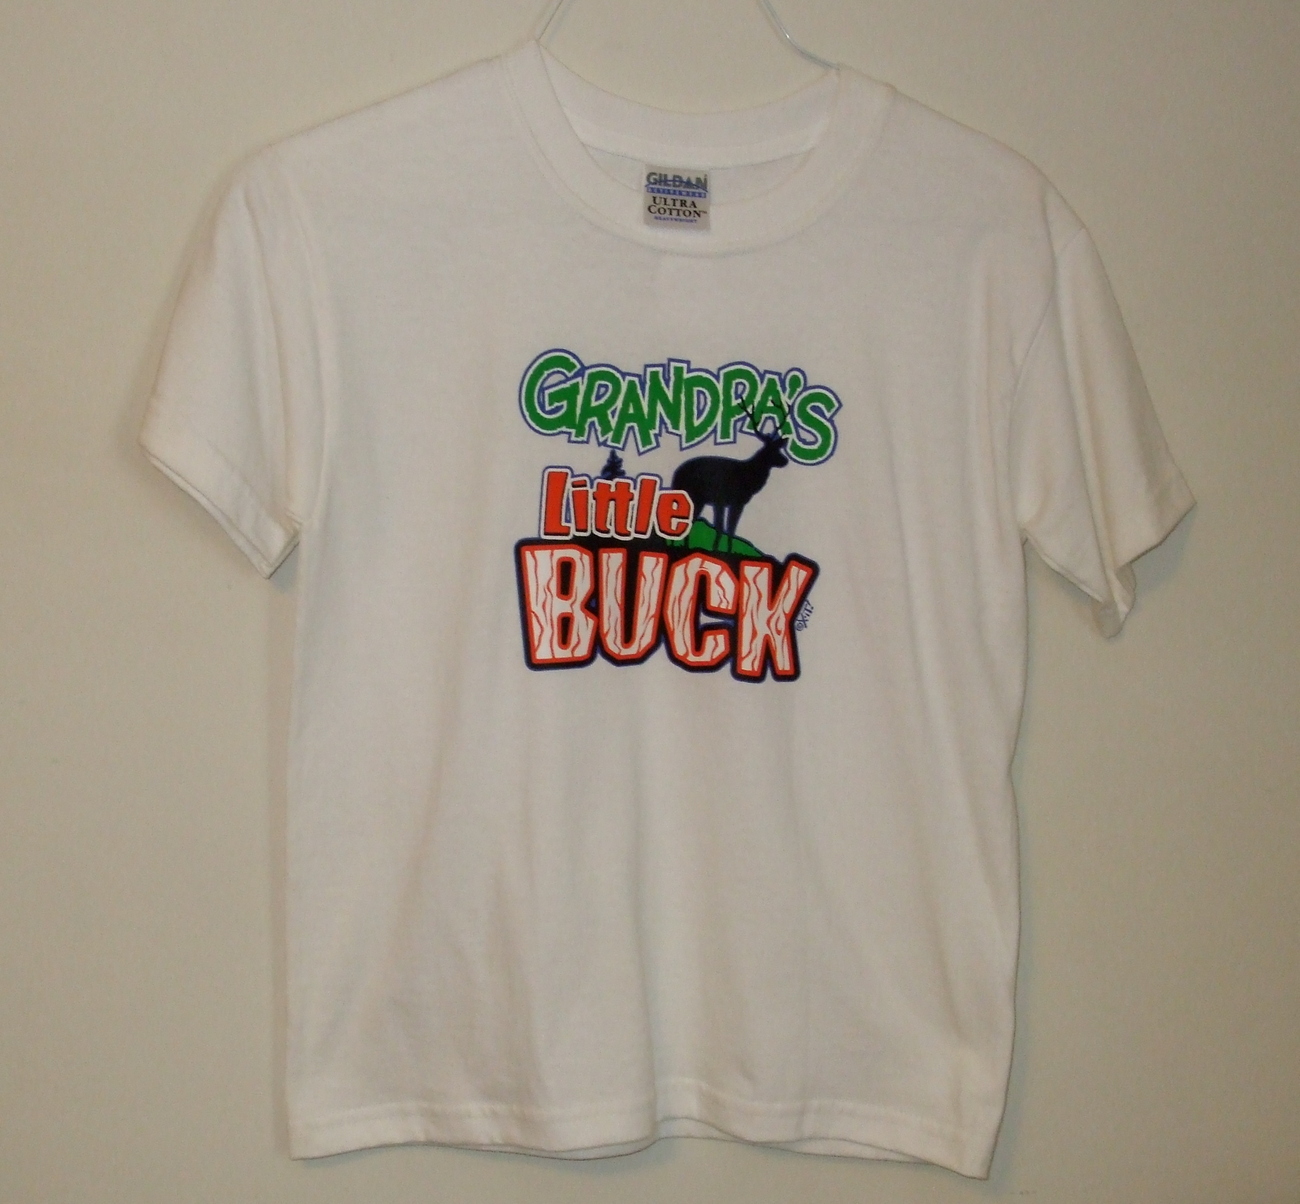 Boys NWOT Gildan White Grandpas Little Buck Short Sleeve T Shirt Size Youth XS - $3.95